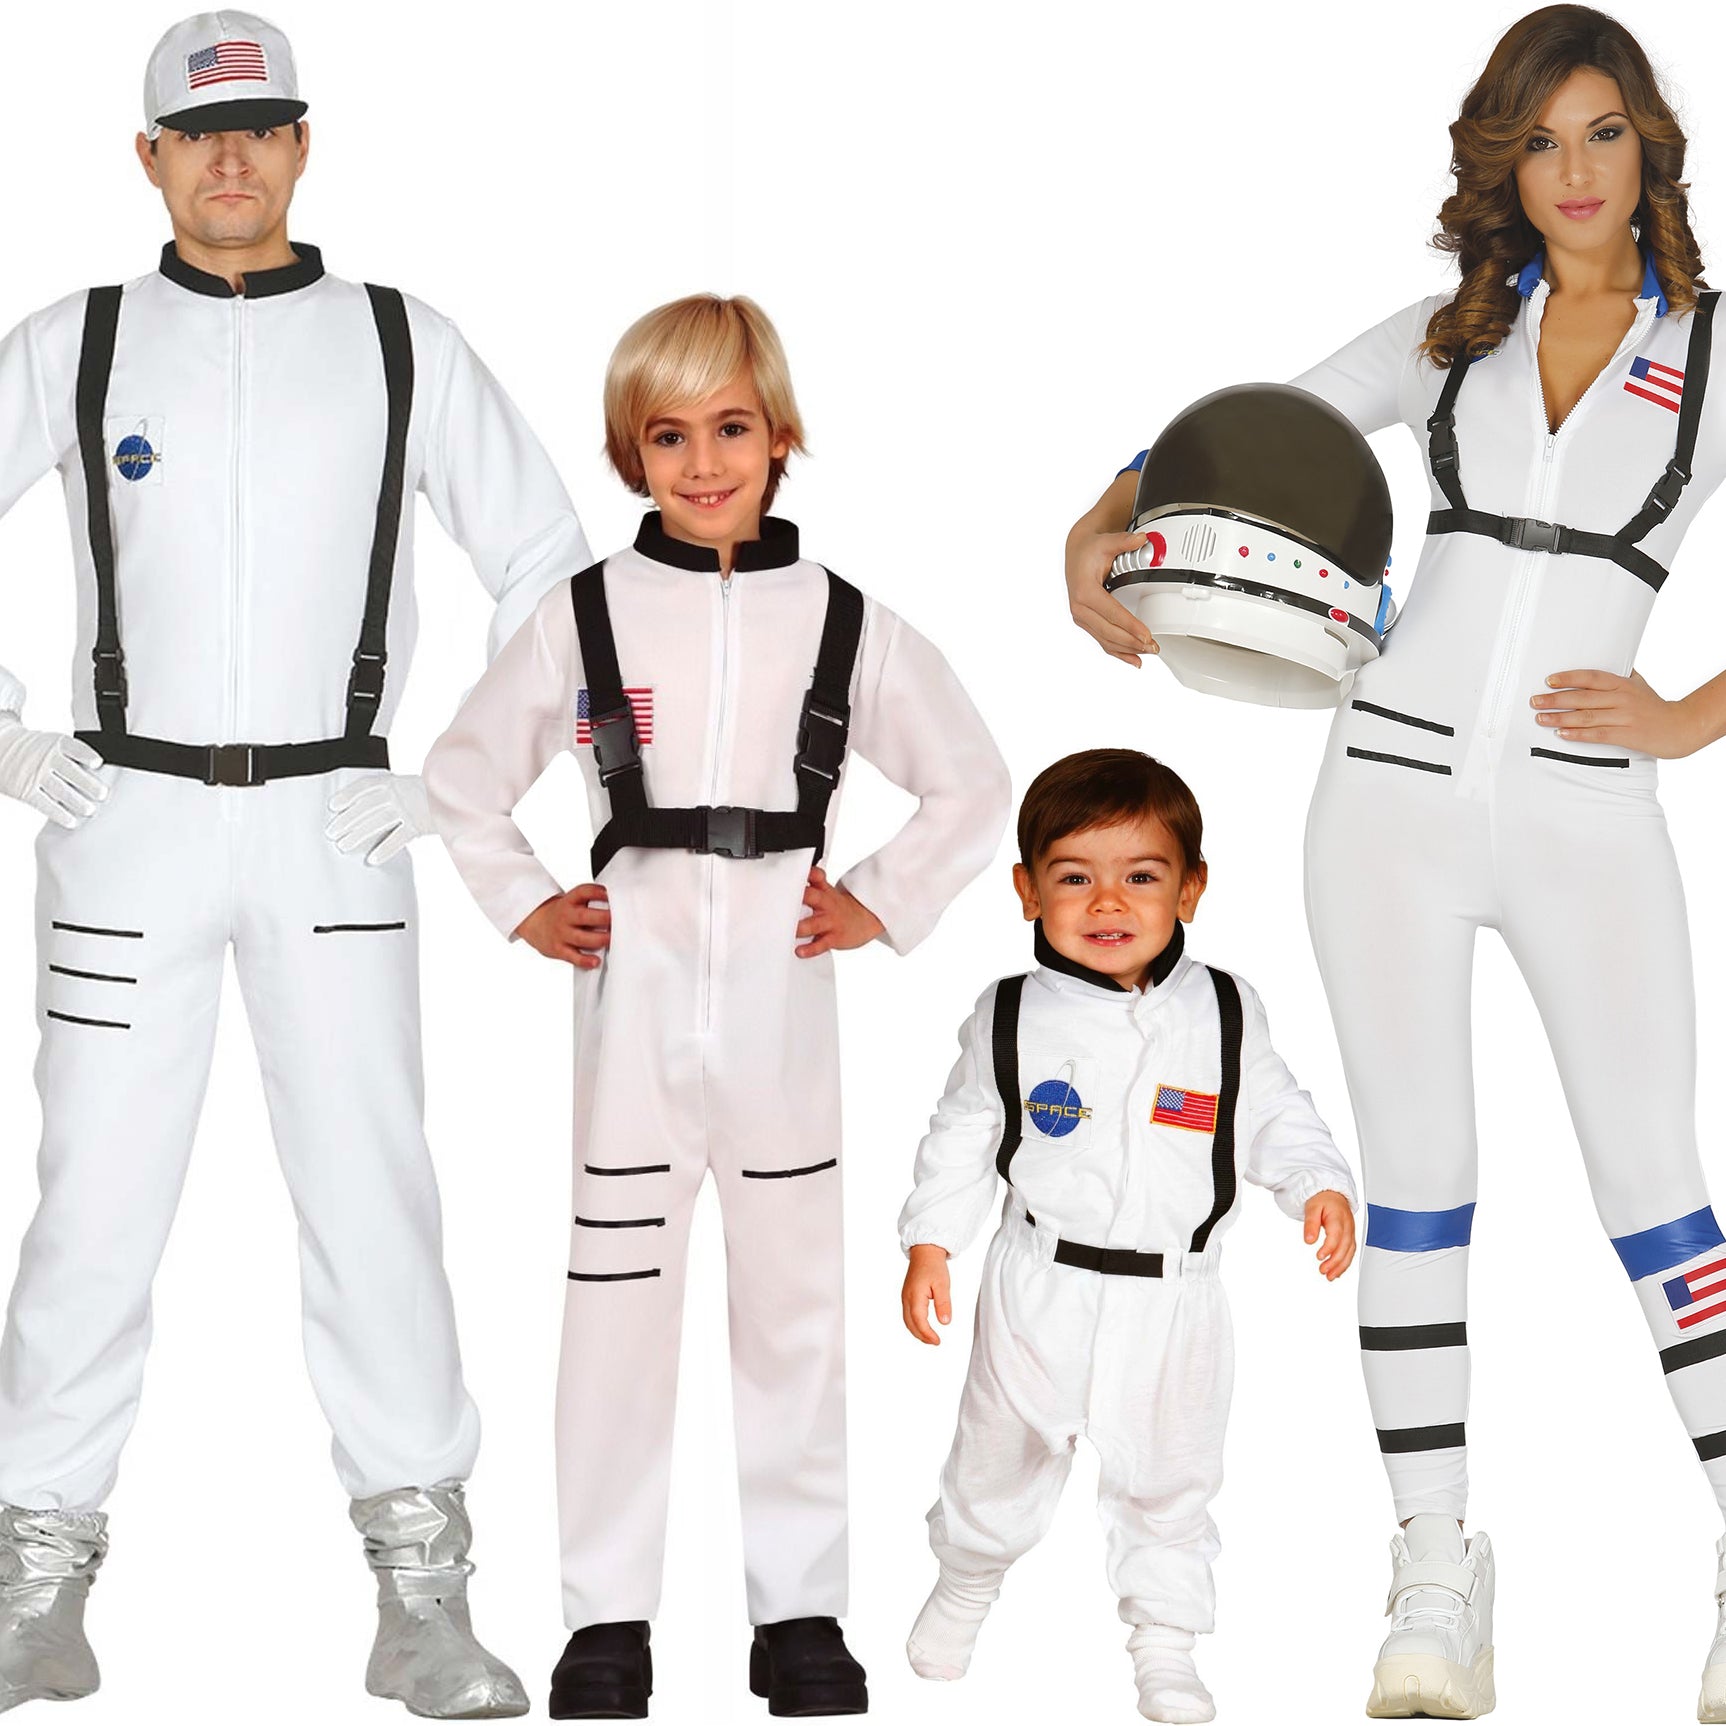 Acquista: Costumi di gruppo da Astronauta